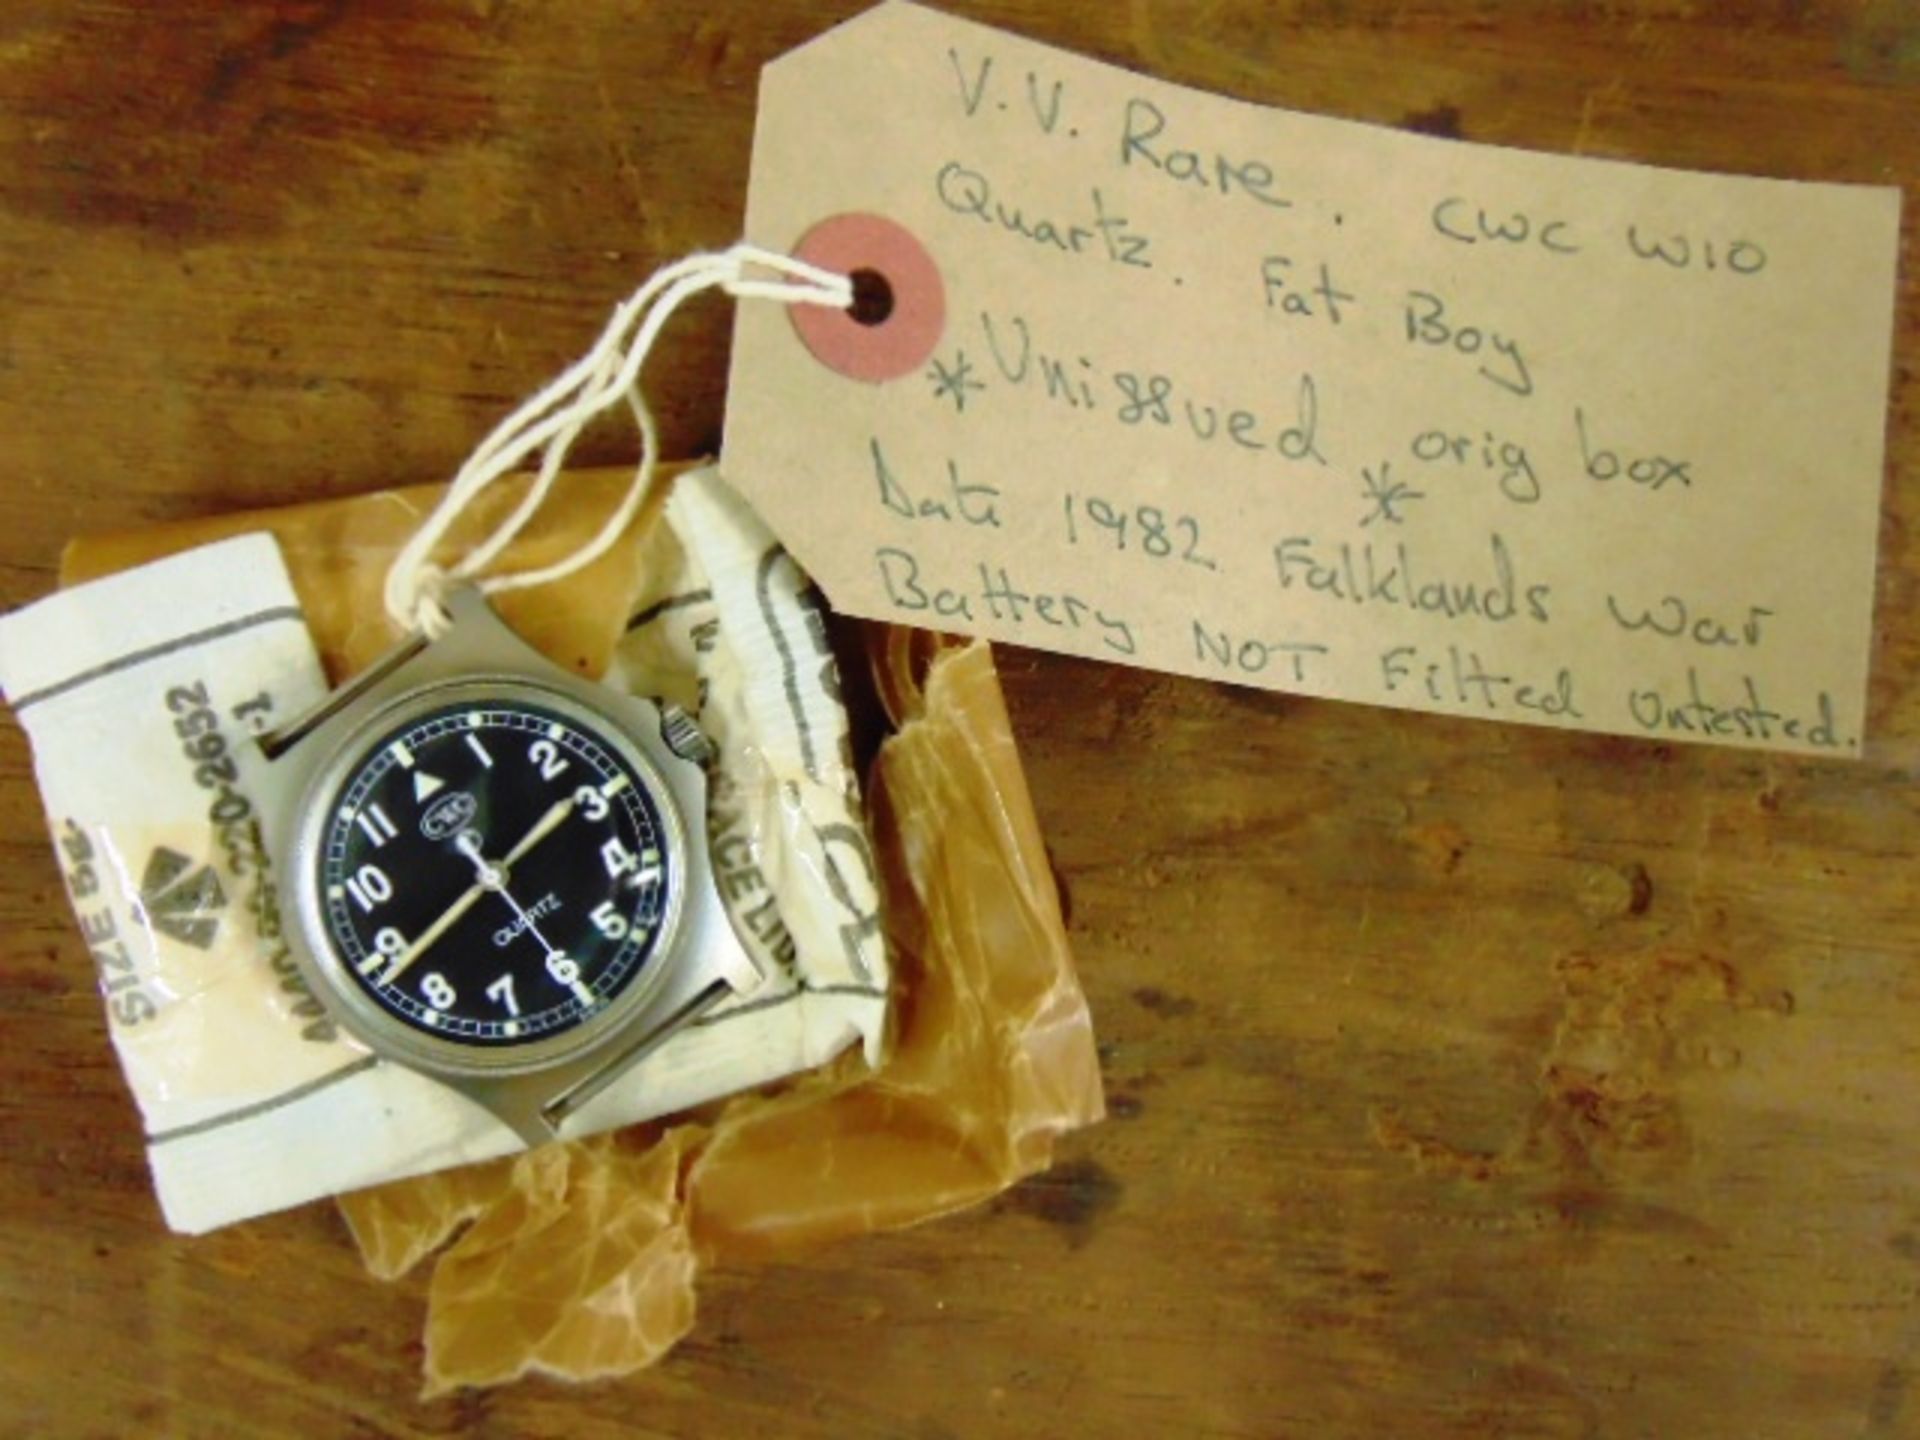 Unissued CWC (Fat Boy/Fat Case) quartz wrist watch with original box - Image 2 of 5